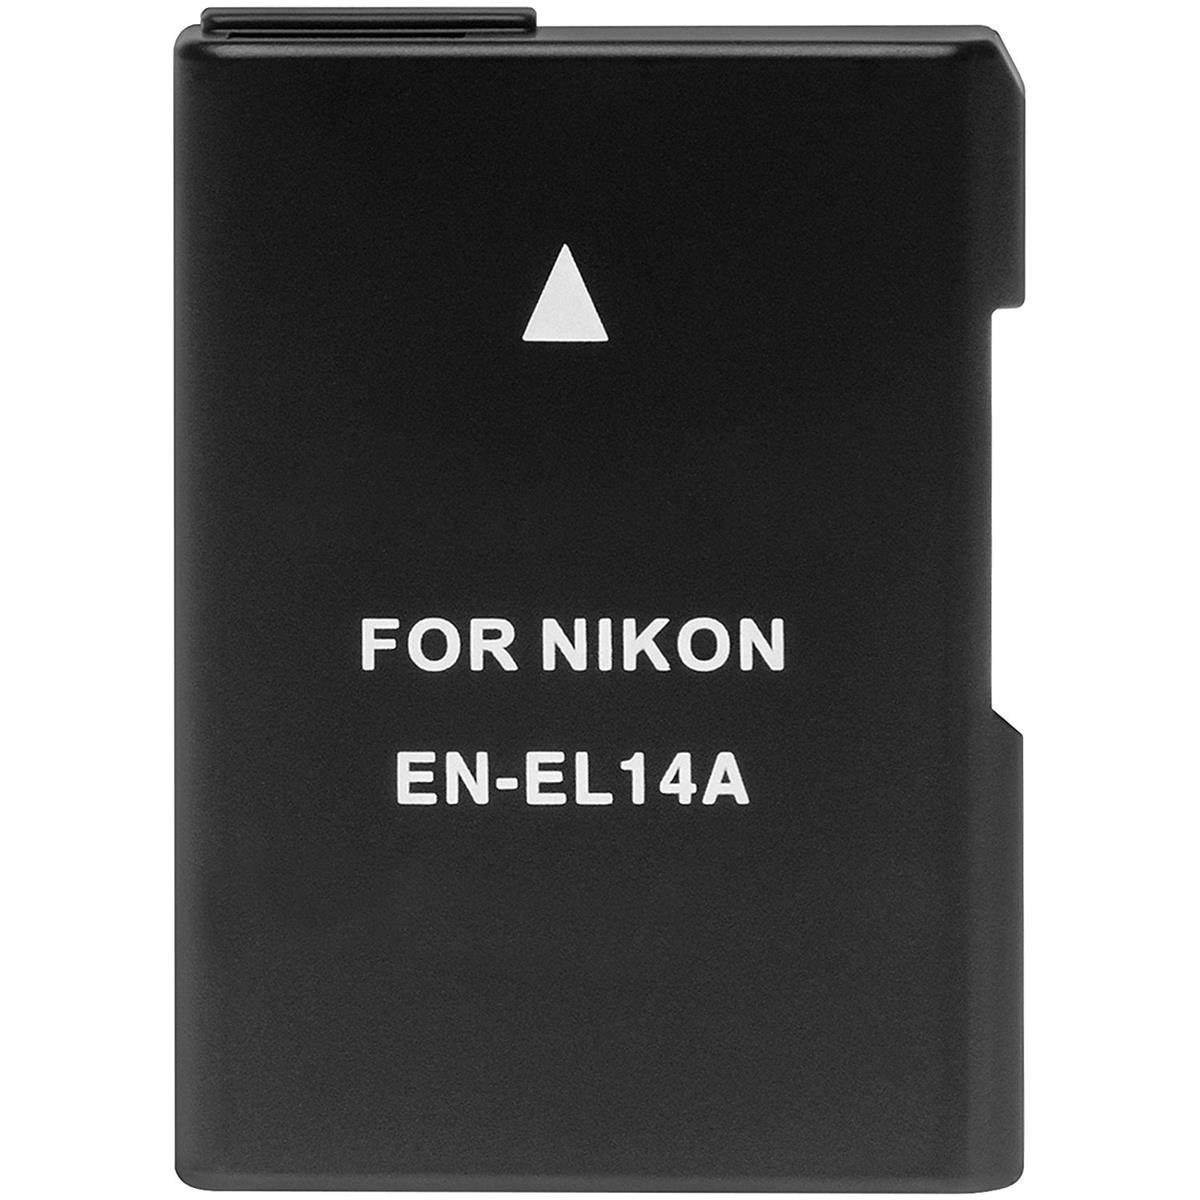 Image of Profoto Power2000 EN-EL14a 7.4V Rechargeable Lithium-Ion Battery for Nikon DSLR Cameras